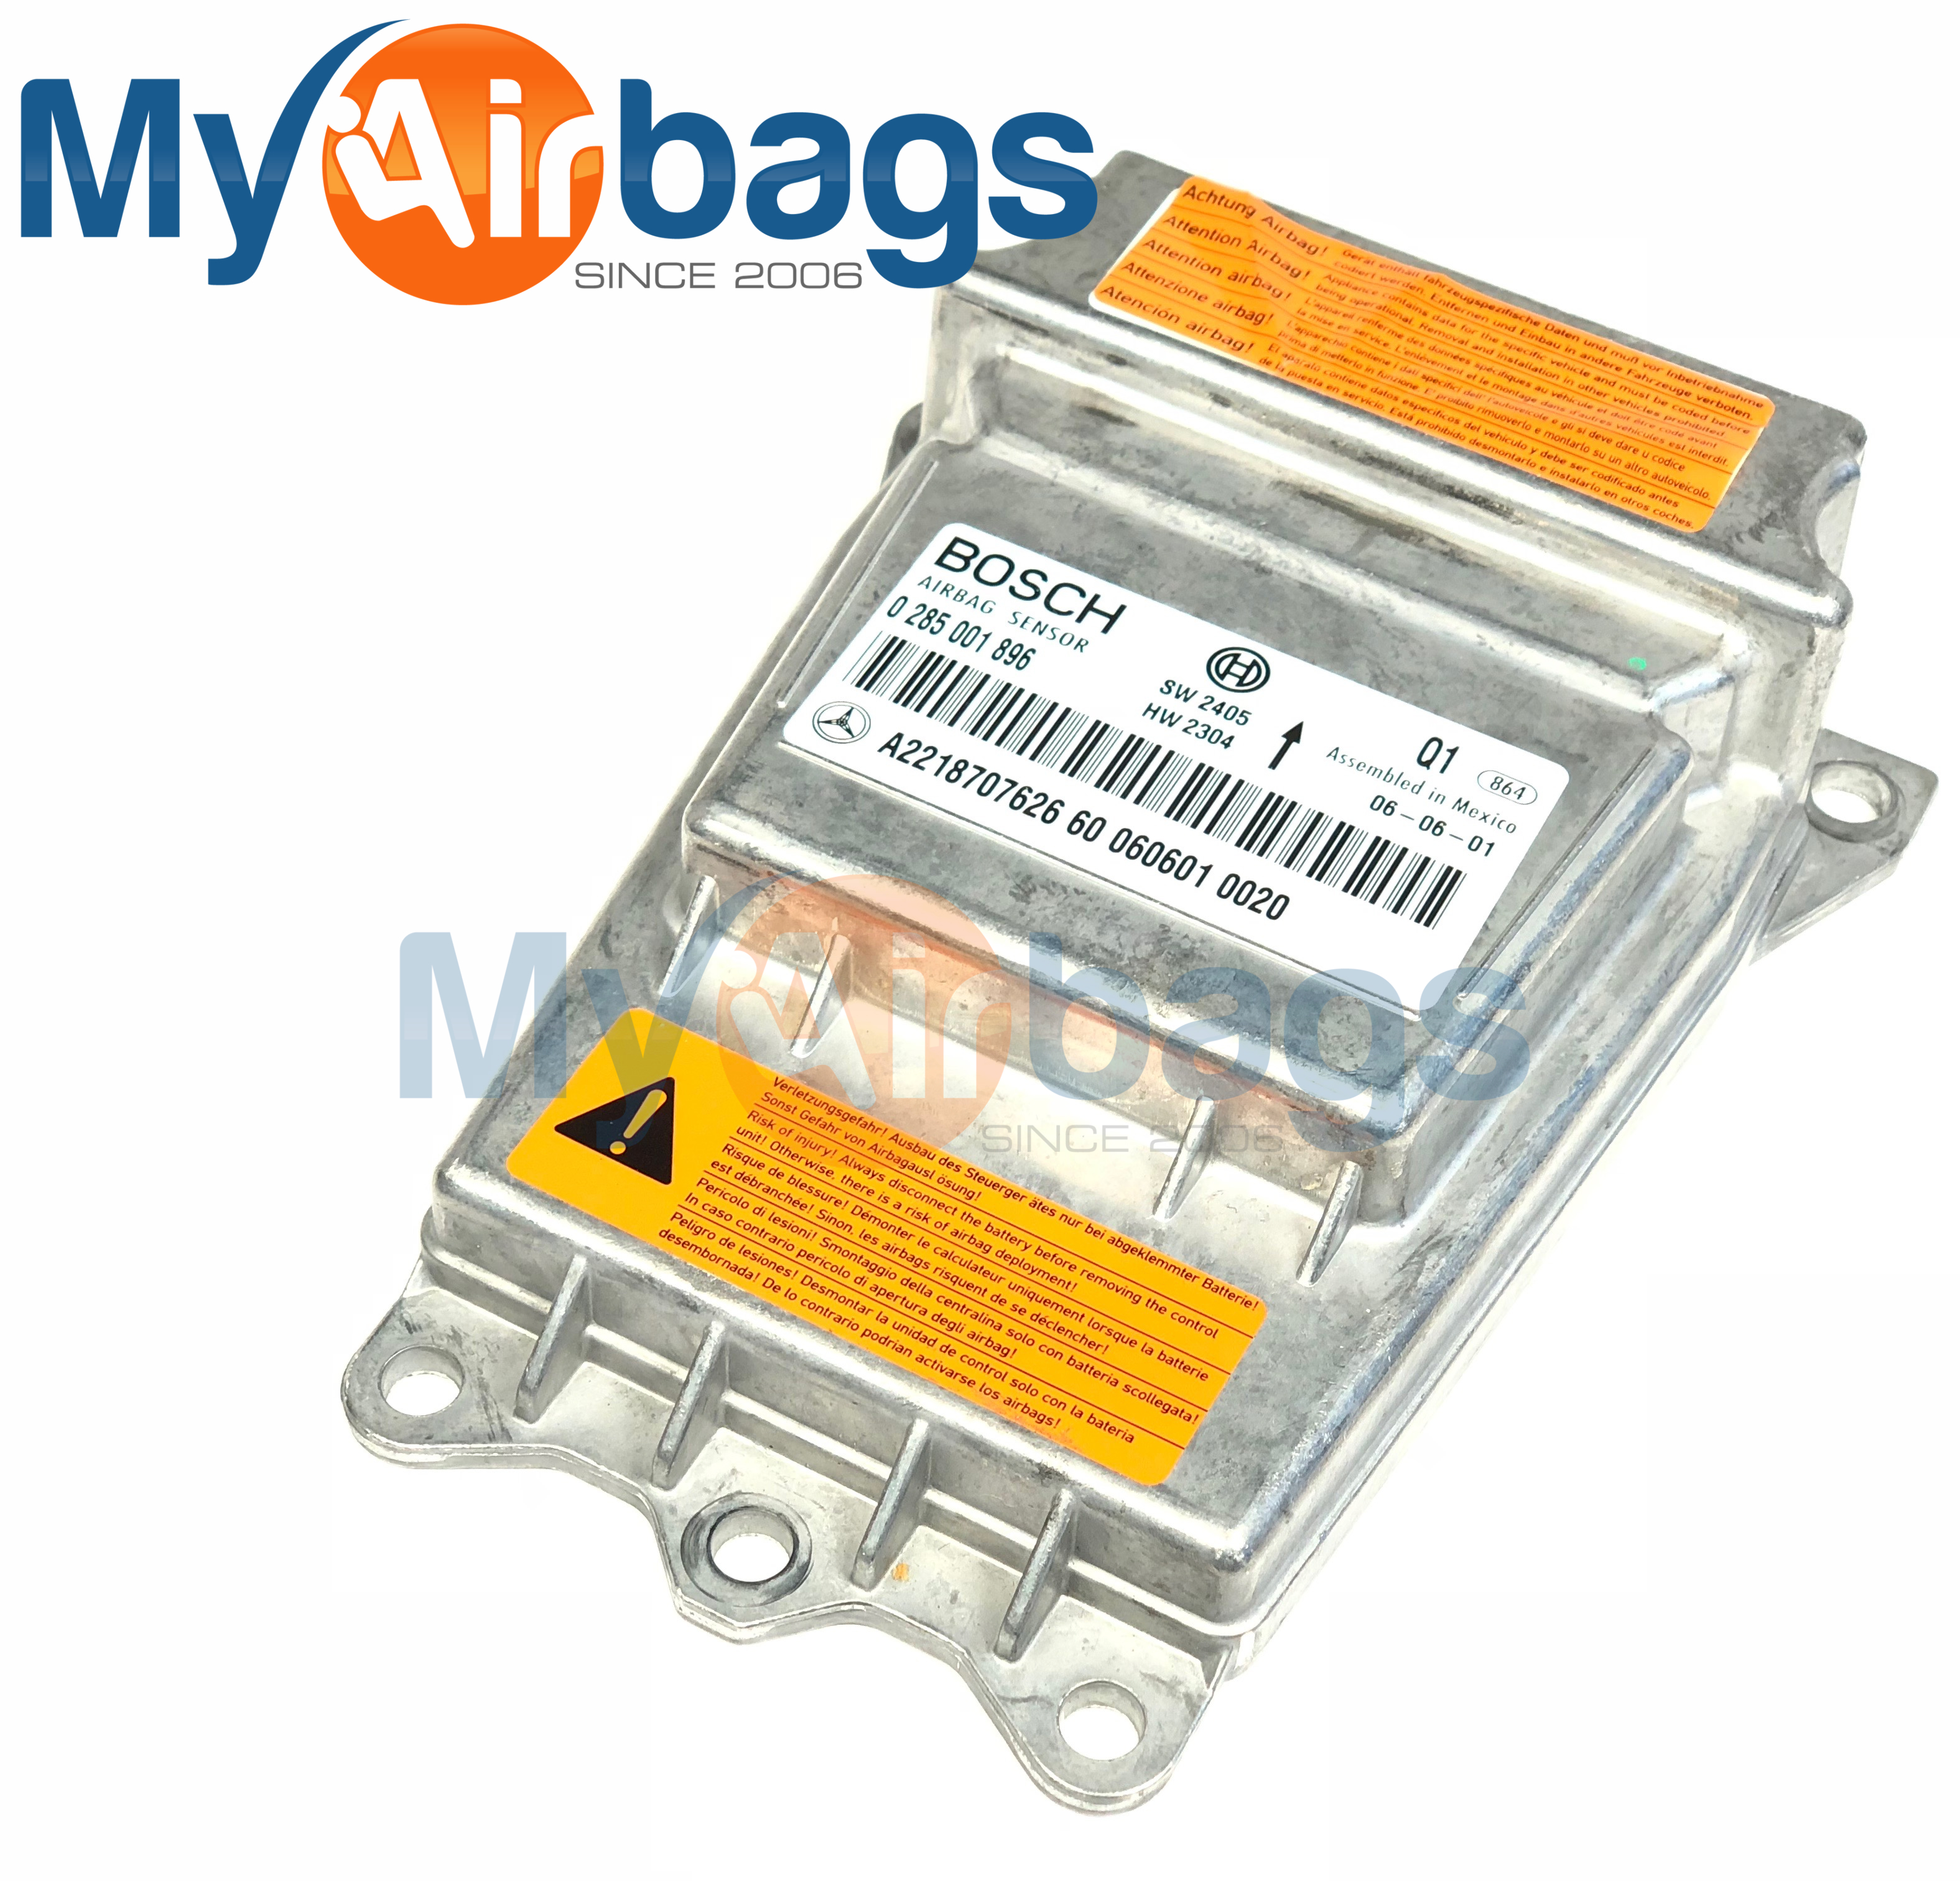 MERCEDES C320 SRS Airbag Computer Diagnostic Occupant Control Module PART #A2218707626